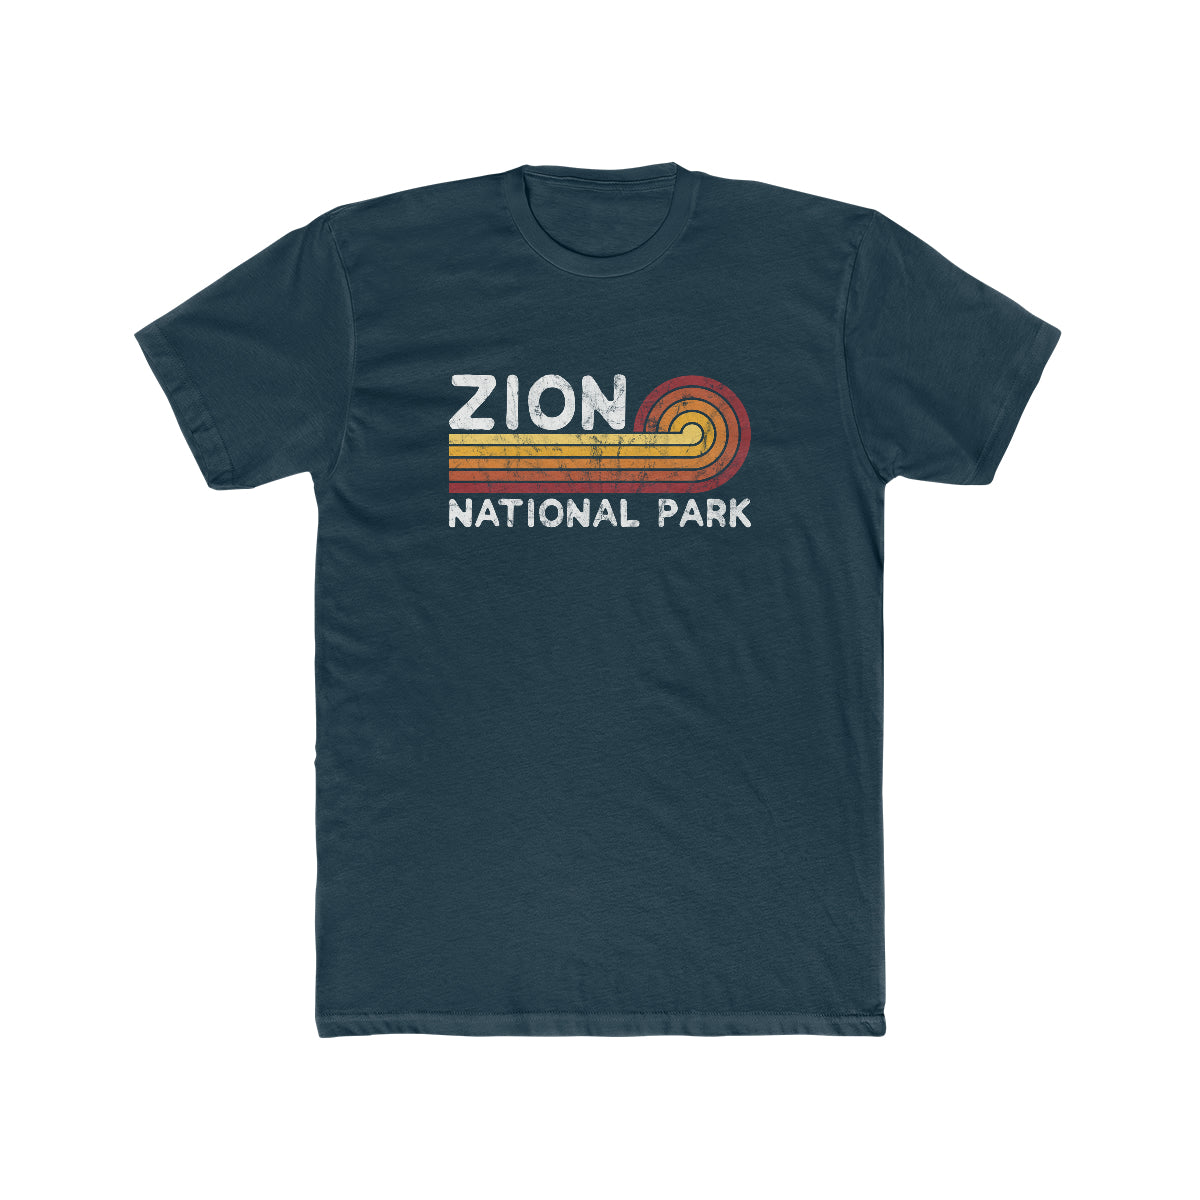 Zion National Park T-Shirt - Utah Desert Colors Stretched Sunrise